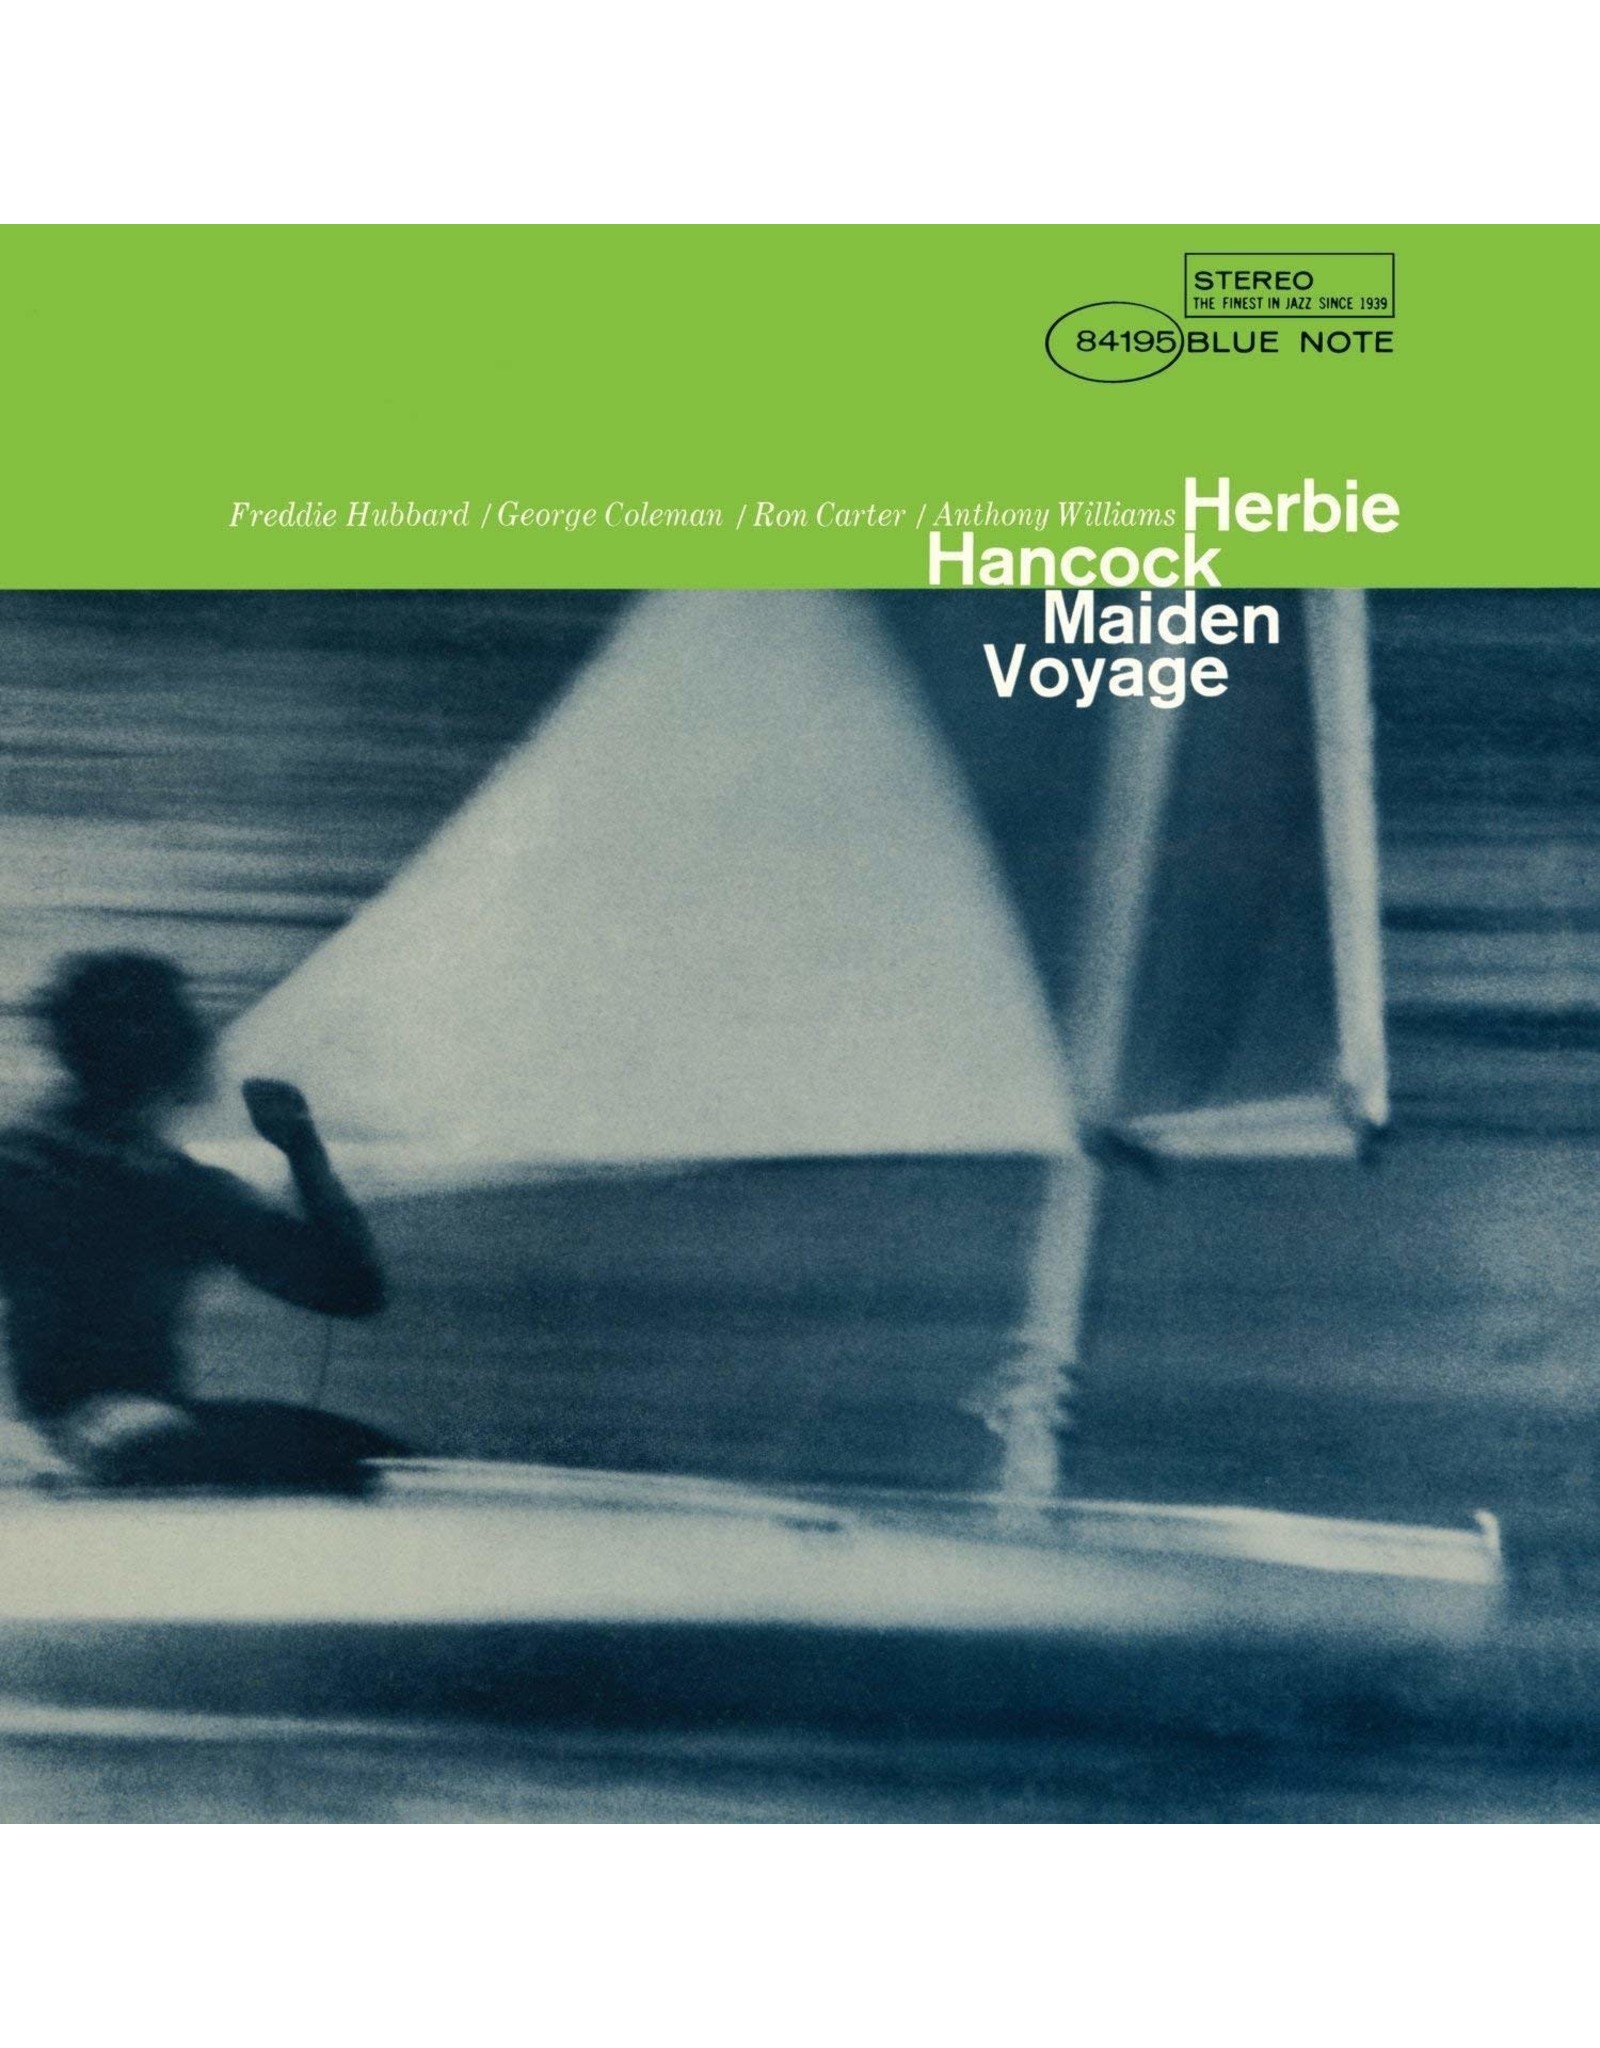 Herbie Hancock - Maiden Voyage (Blue Note Classic)